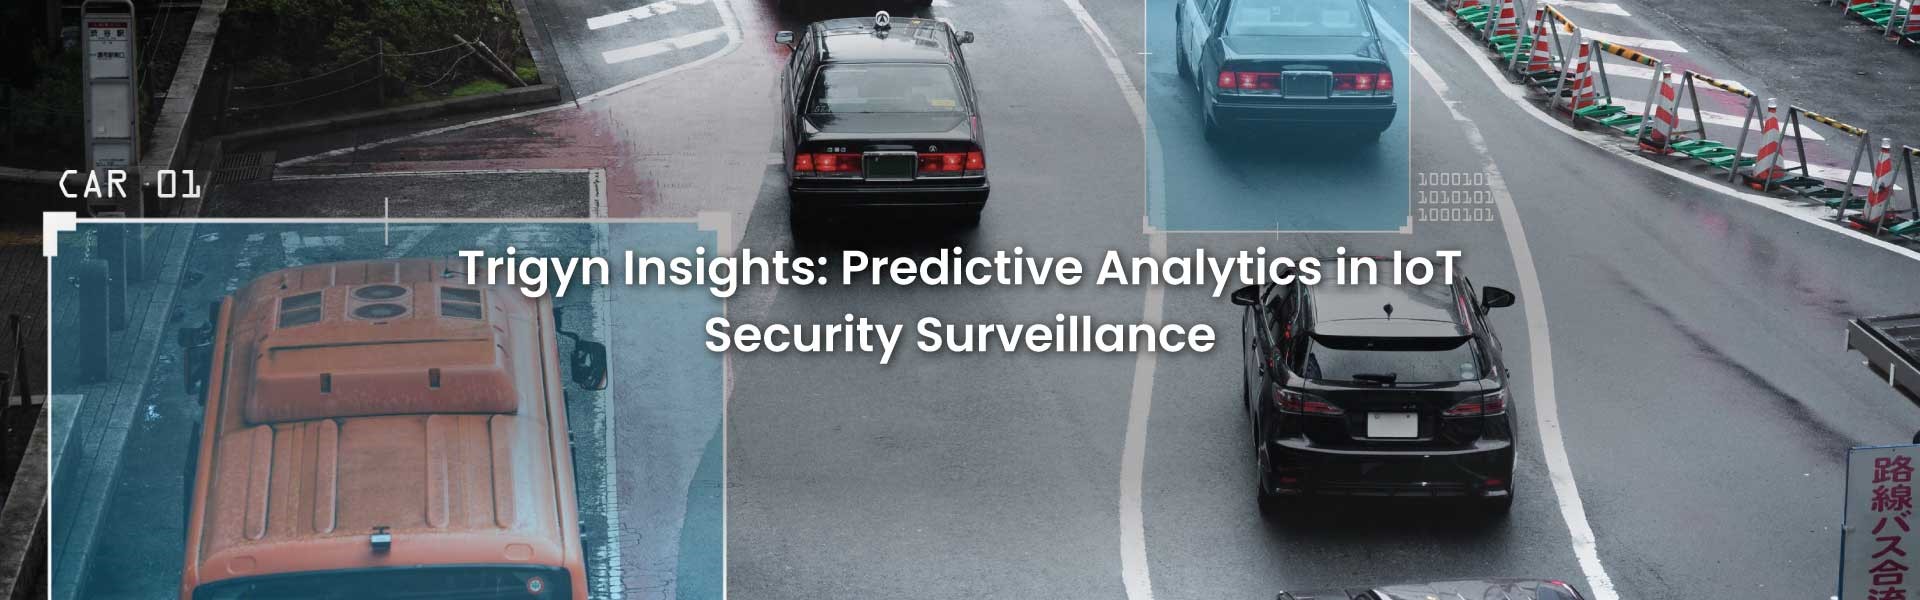 IoT Security Surveillance 